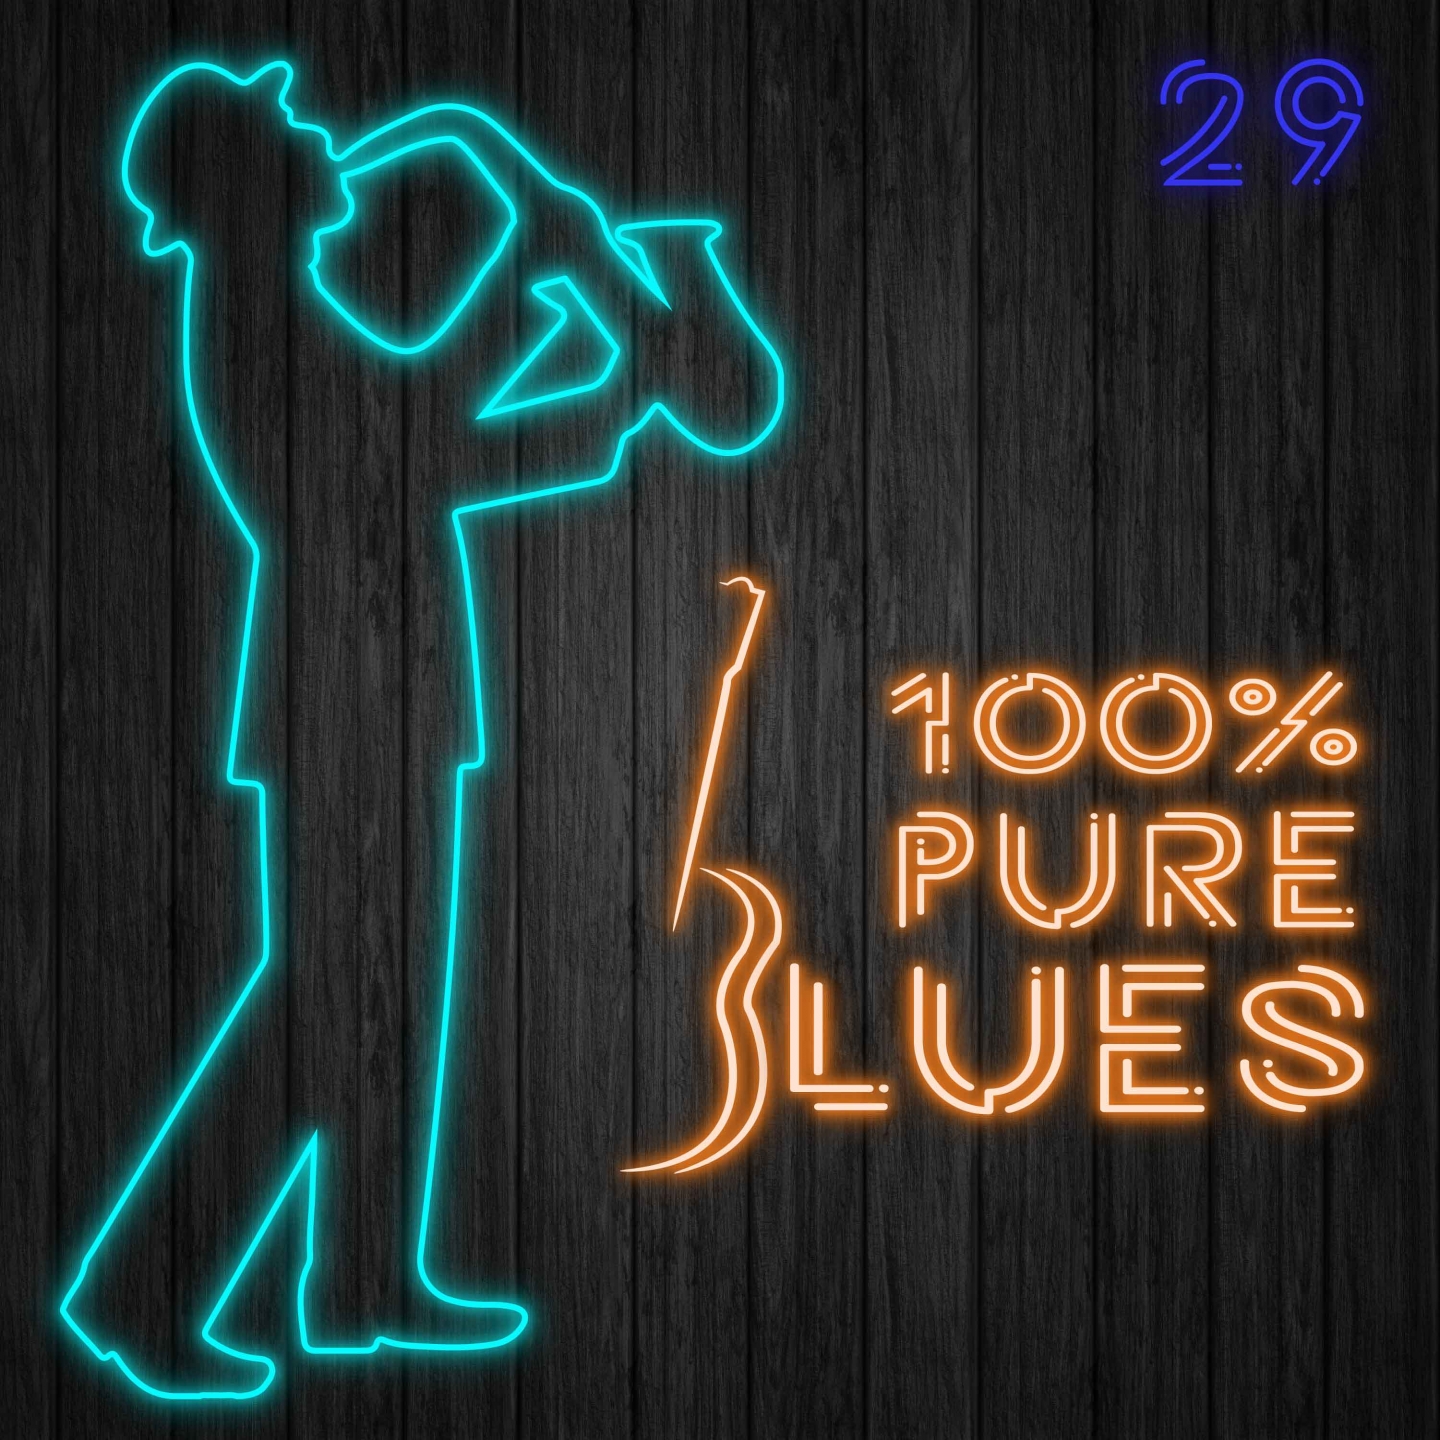 100% Pure Blues / 29